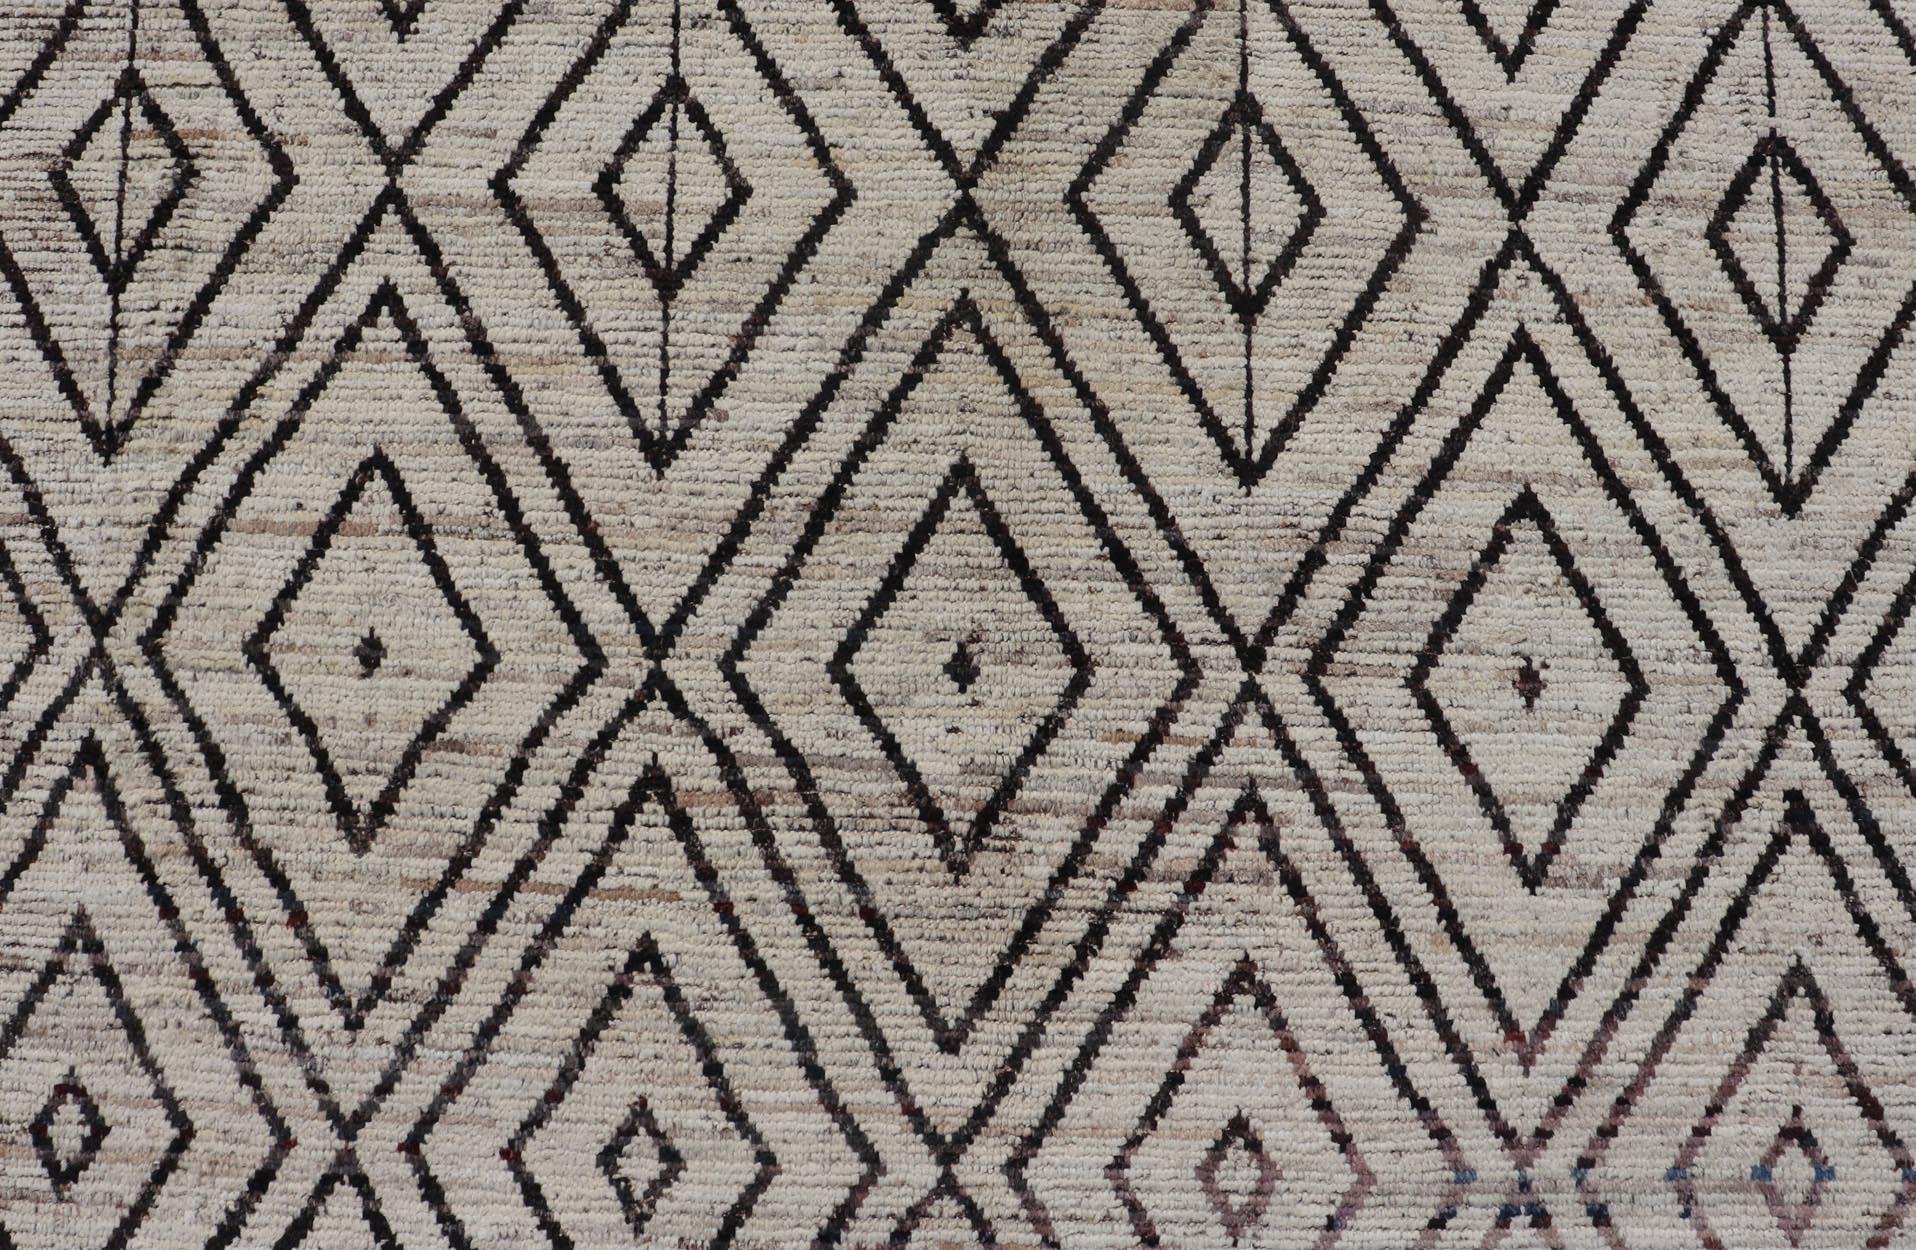  Tribal Moroccan Modern Rug in Wool with Geometric Diamond Design  In New Condition For Sale In Atlanta, GA